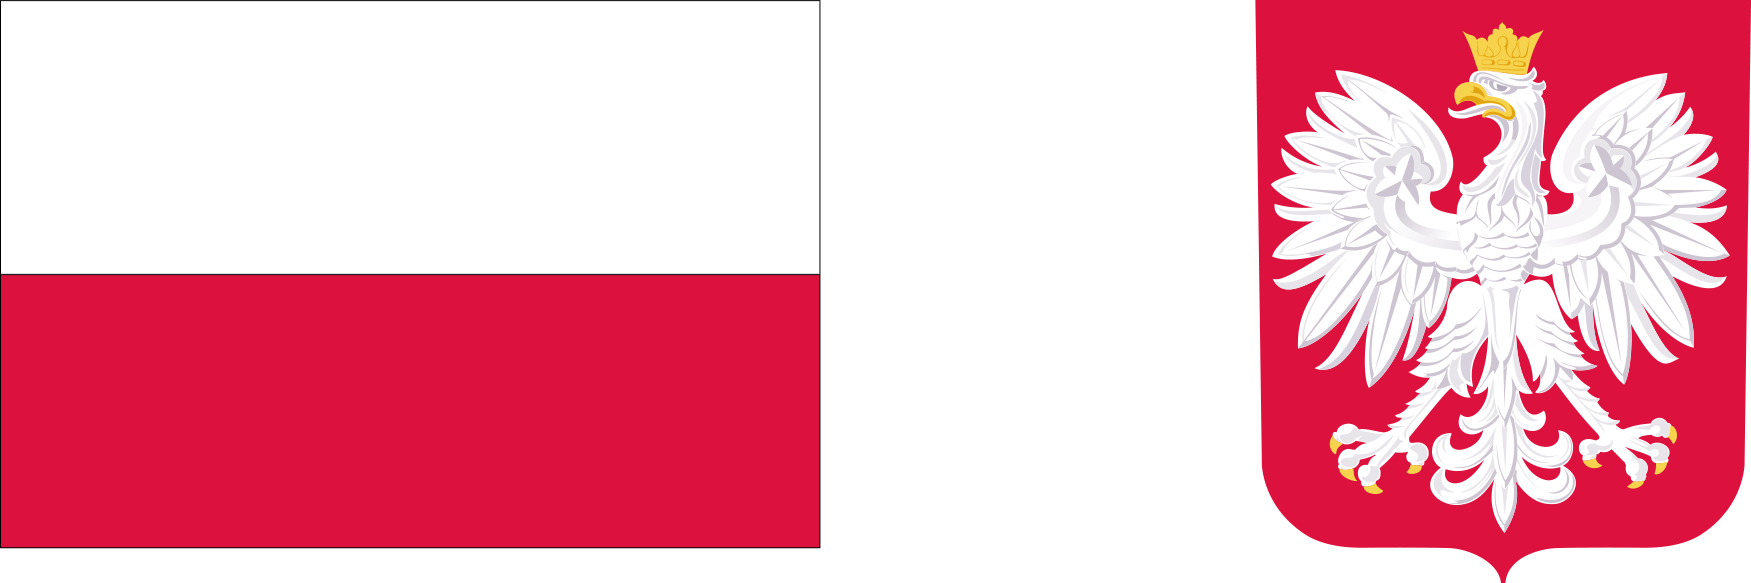 POLSKA FLAGA I GODŁO